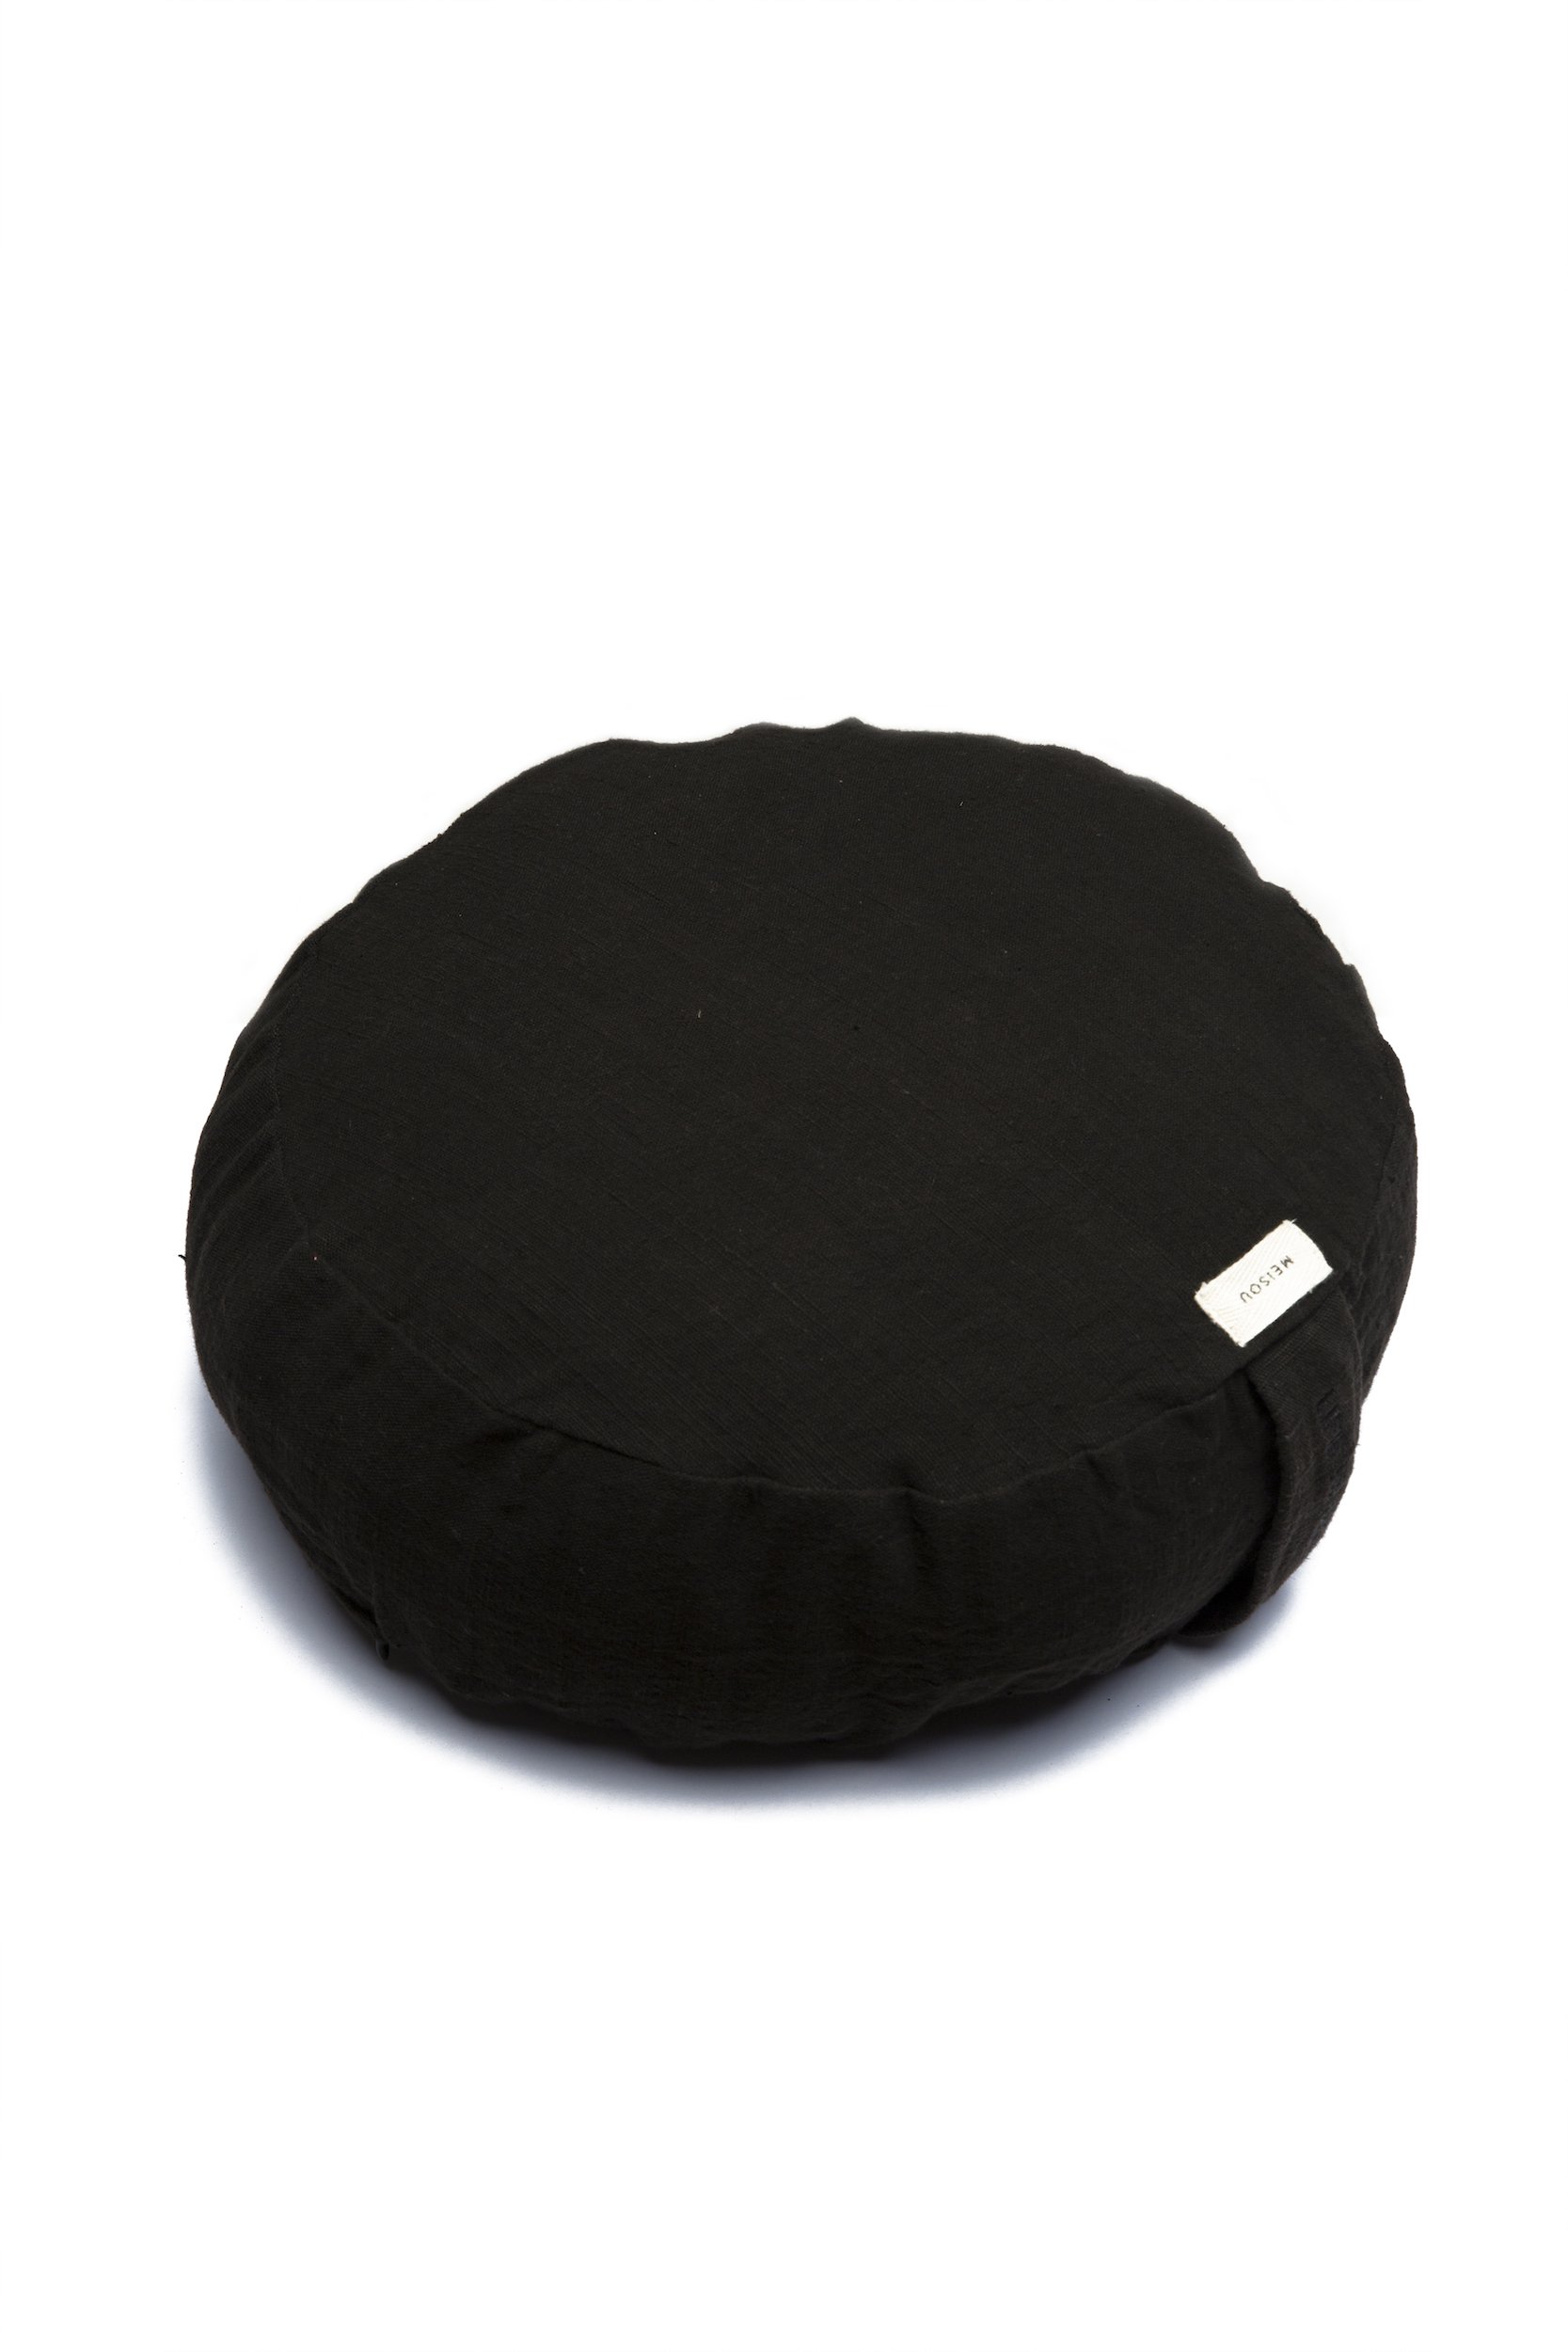 Organic Meditation Cushion (Black)